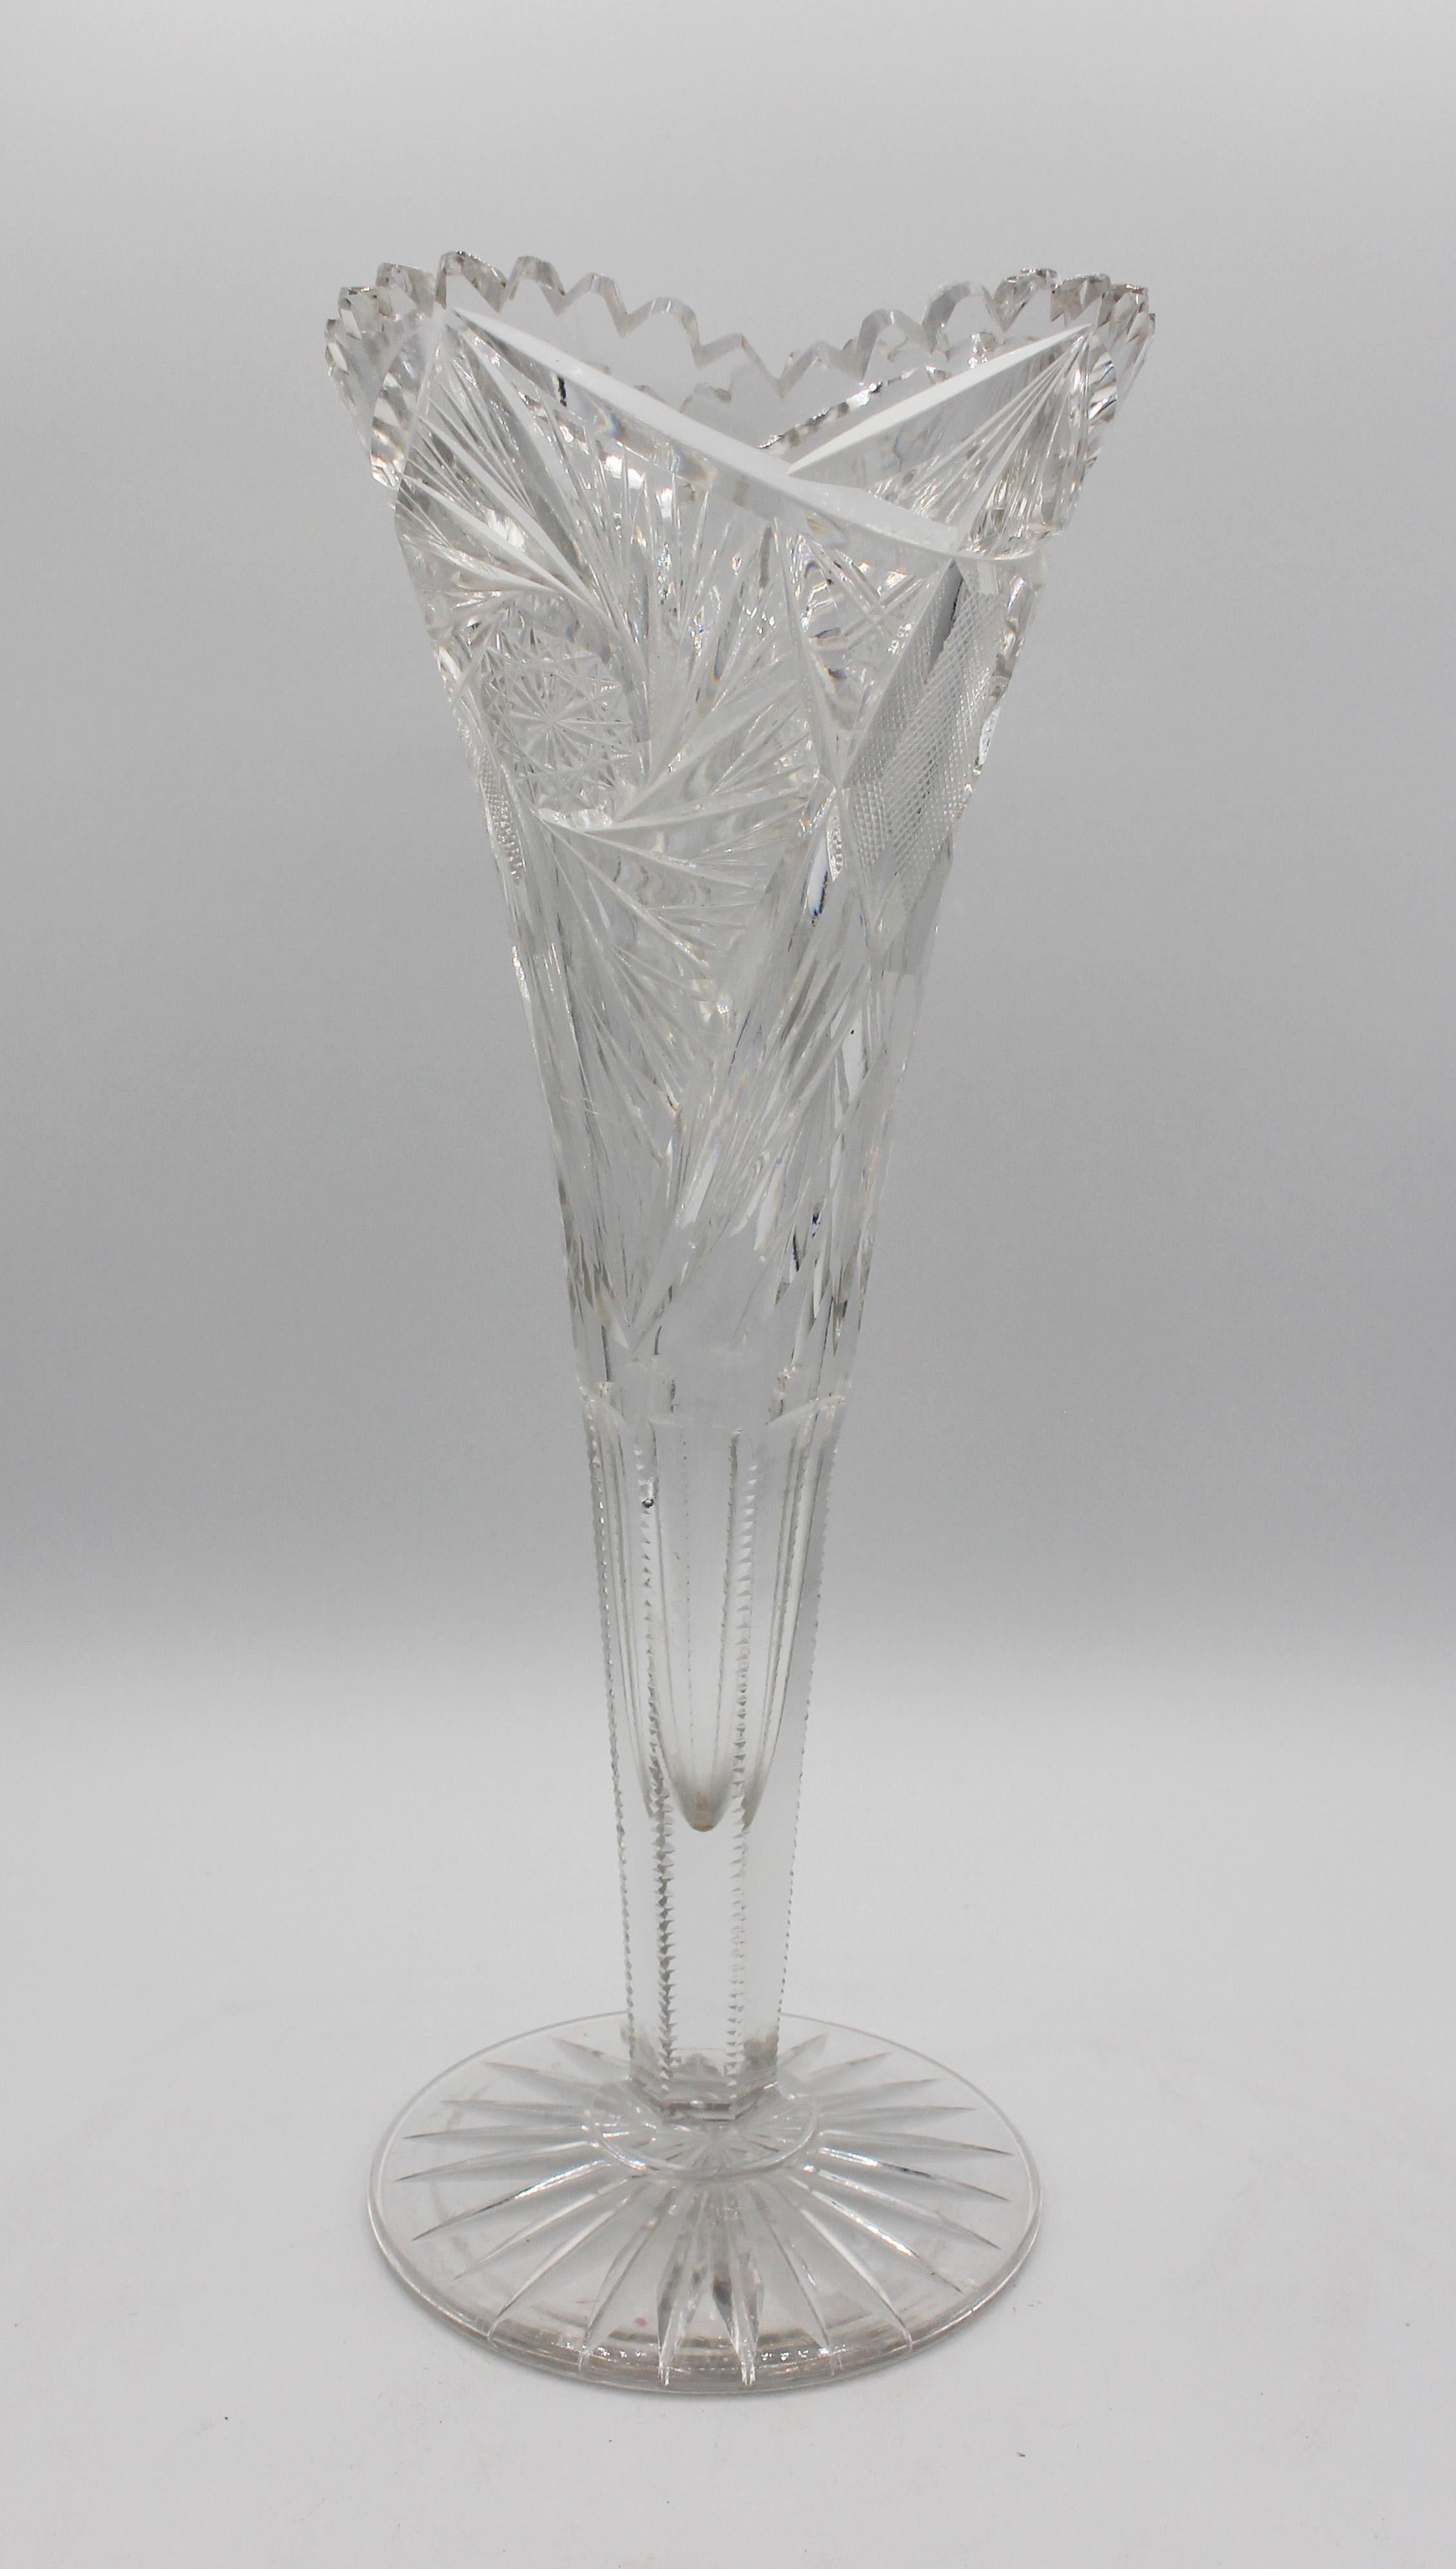 Circa 1895-1910 cut glass trumpet vase, American, brilliant period cut glass. One minor point chip. 13 3/4